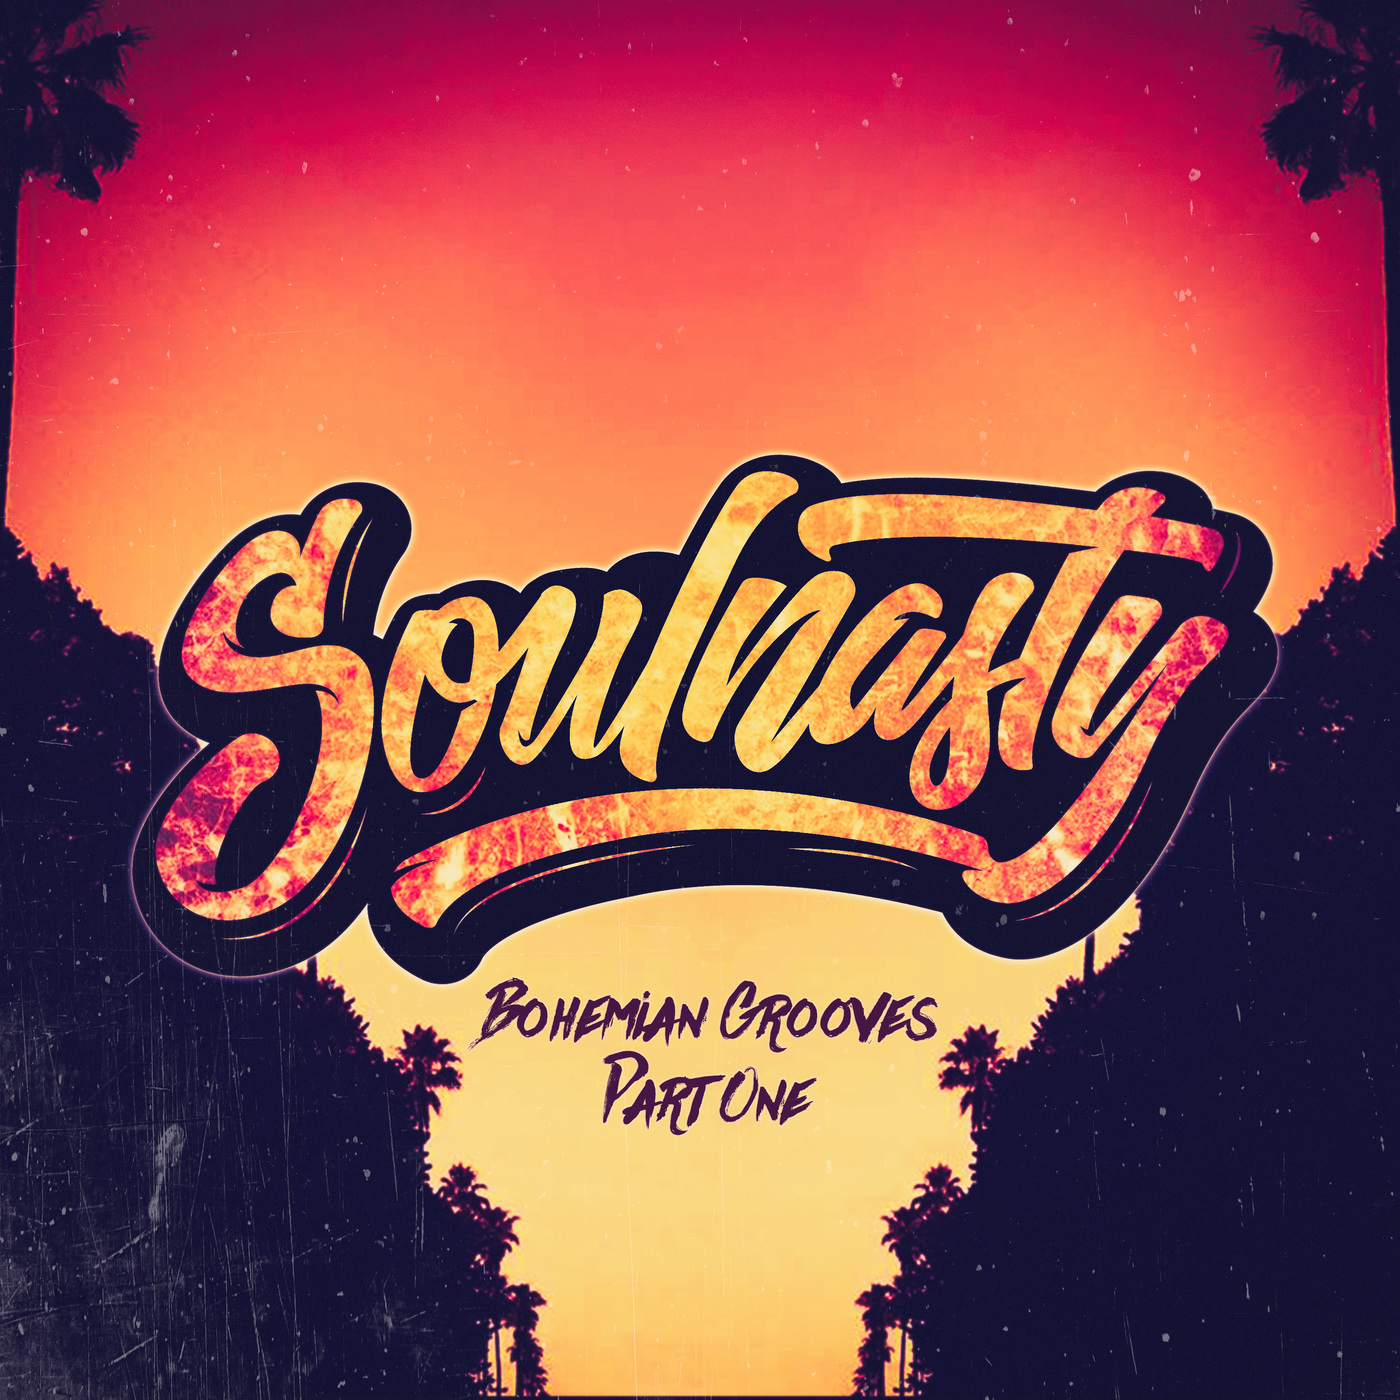 Soulnasty - Bohemian Grooves, Pt. 1 / Redwood